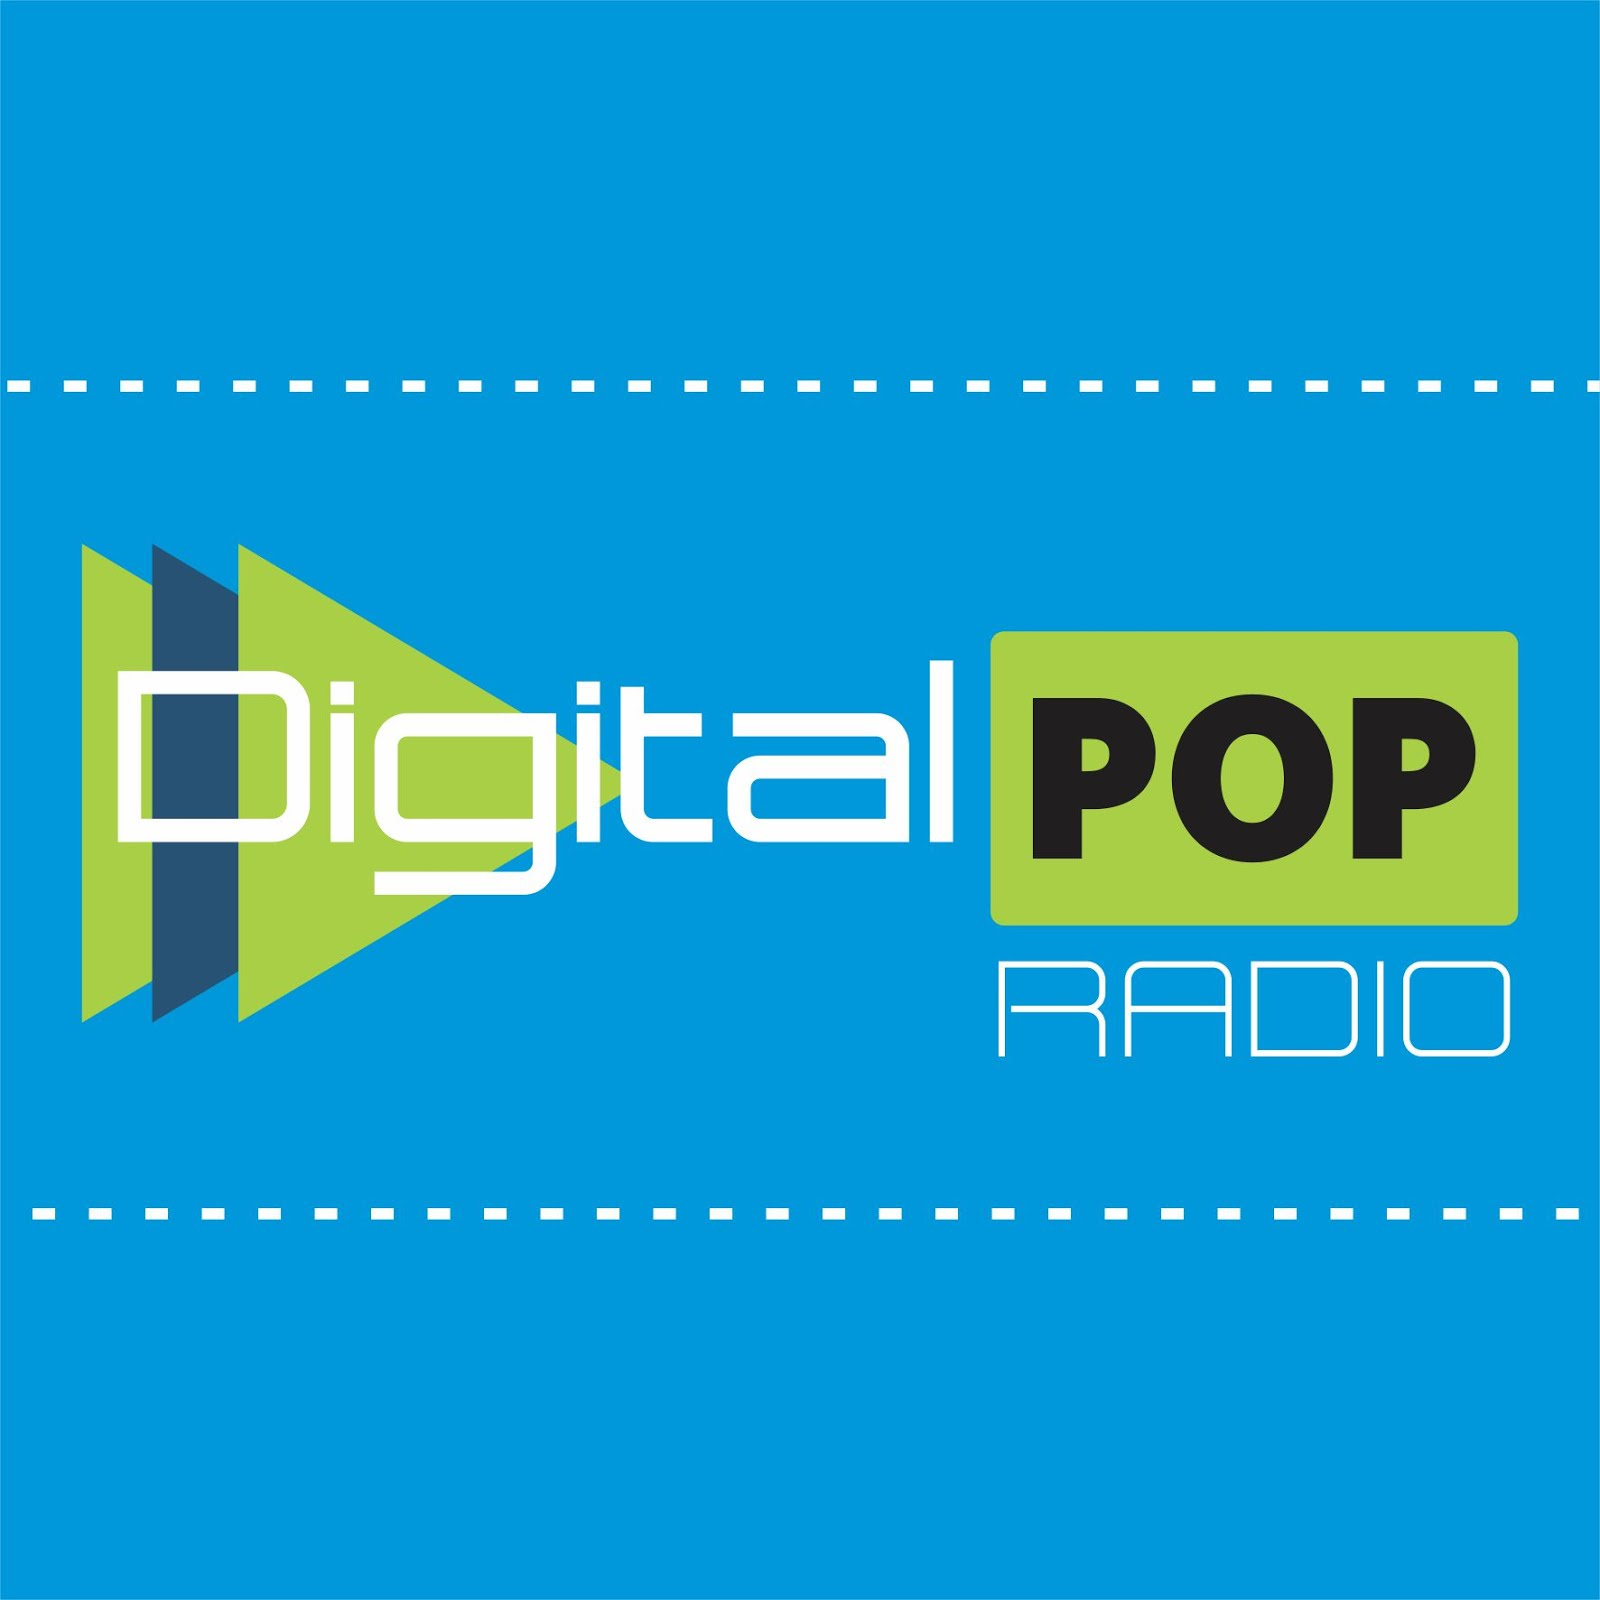 Digital Pop Radio